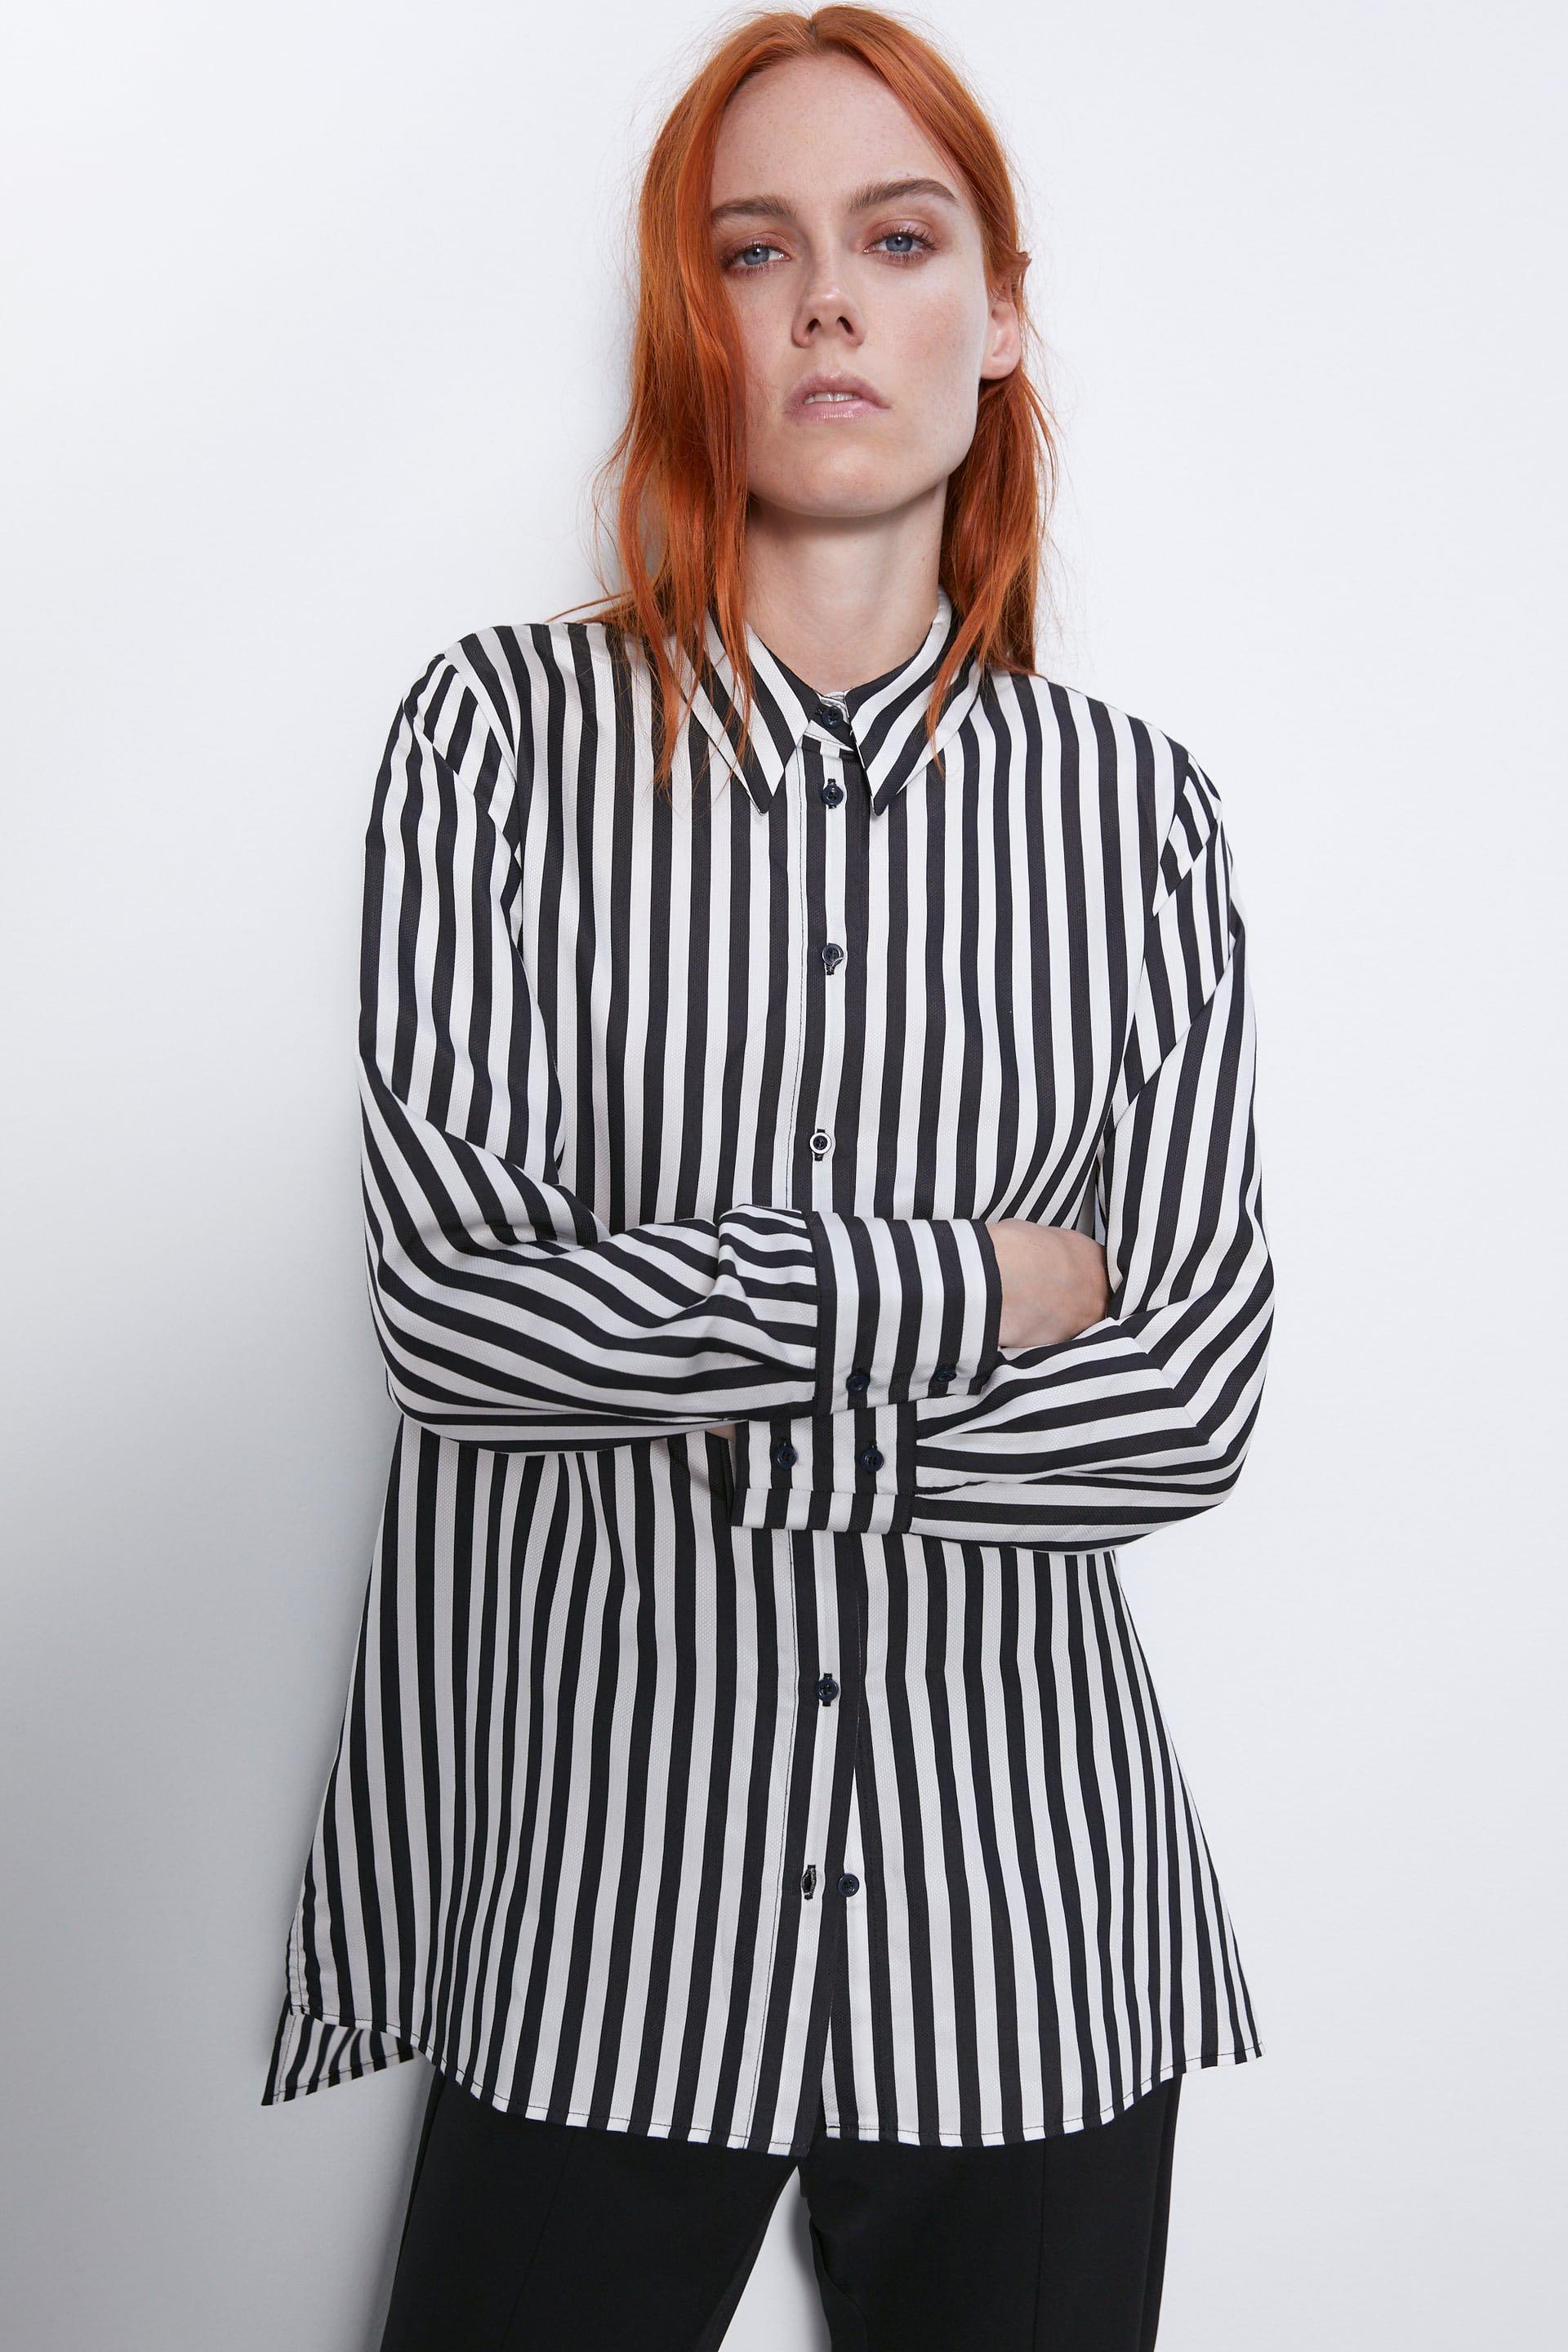 zara black and white striped shirt